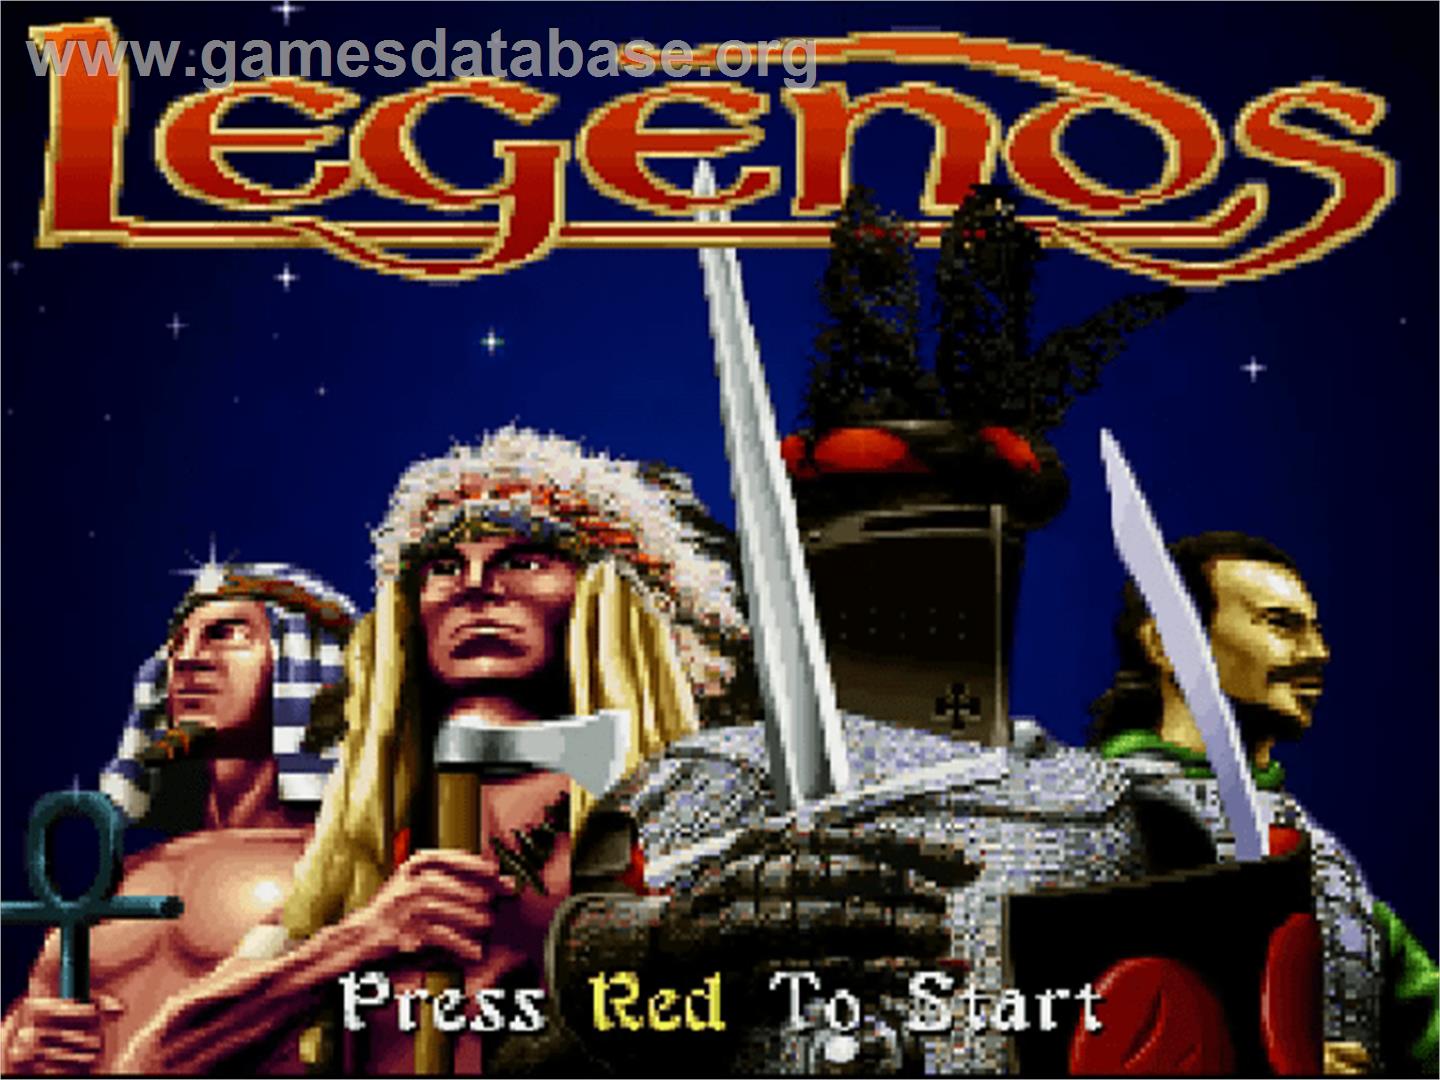 Legends - Commodore Amiga CD32 - Artwork - Title Screen